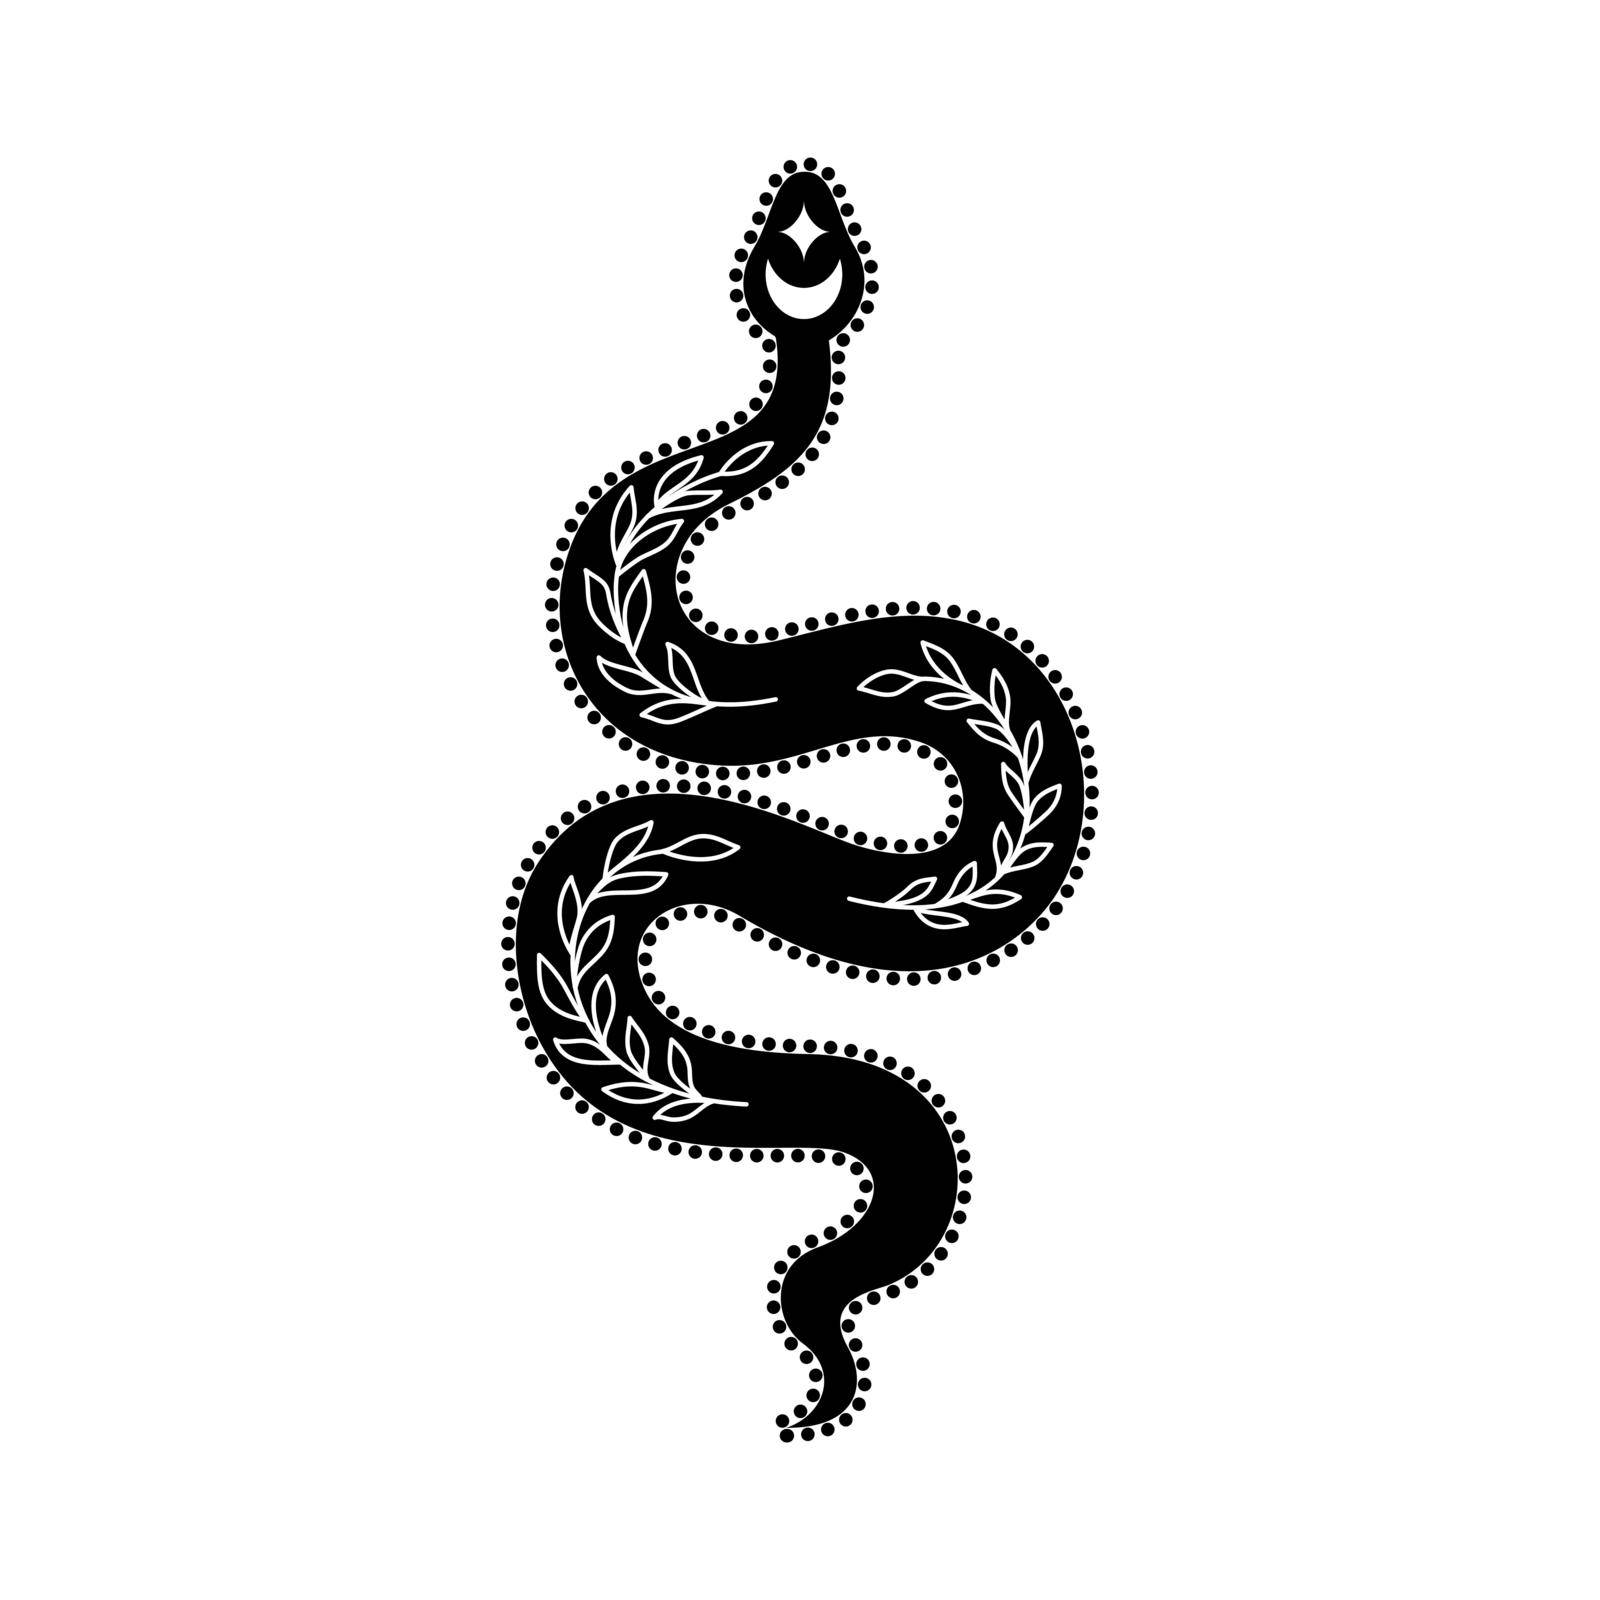 Mystic snake in doodle style by kiyanochka